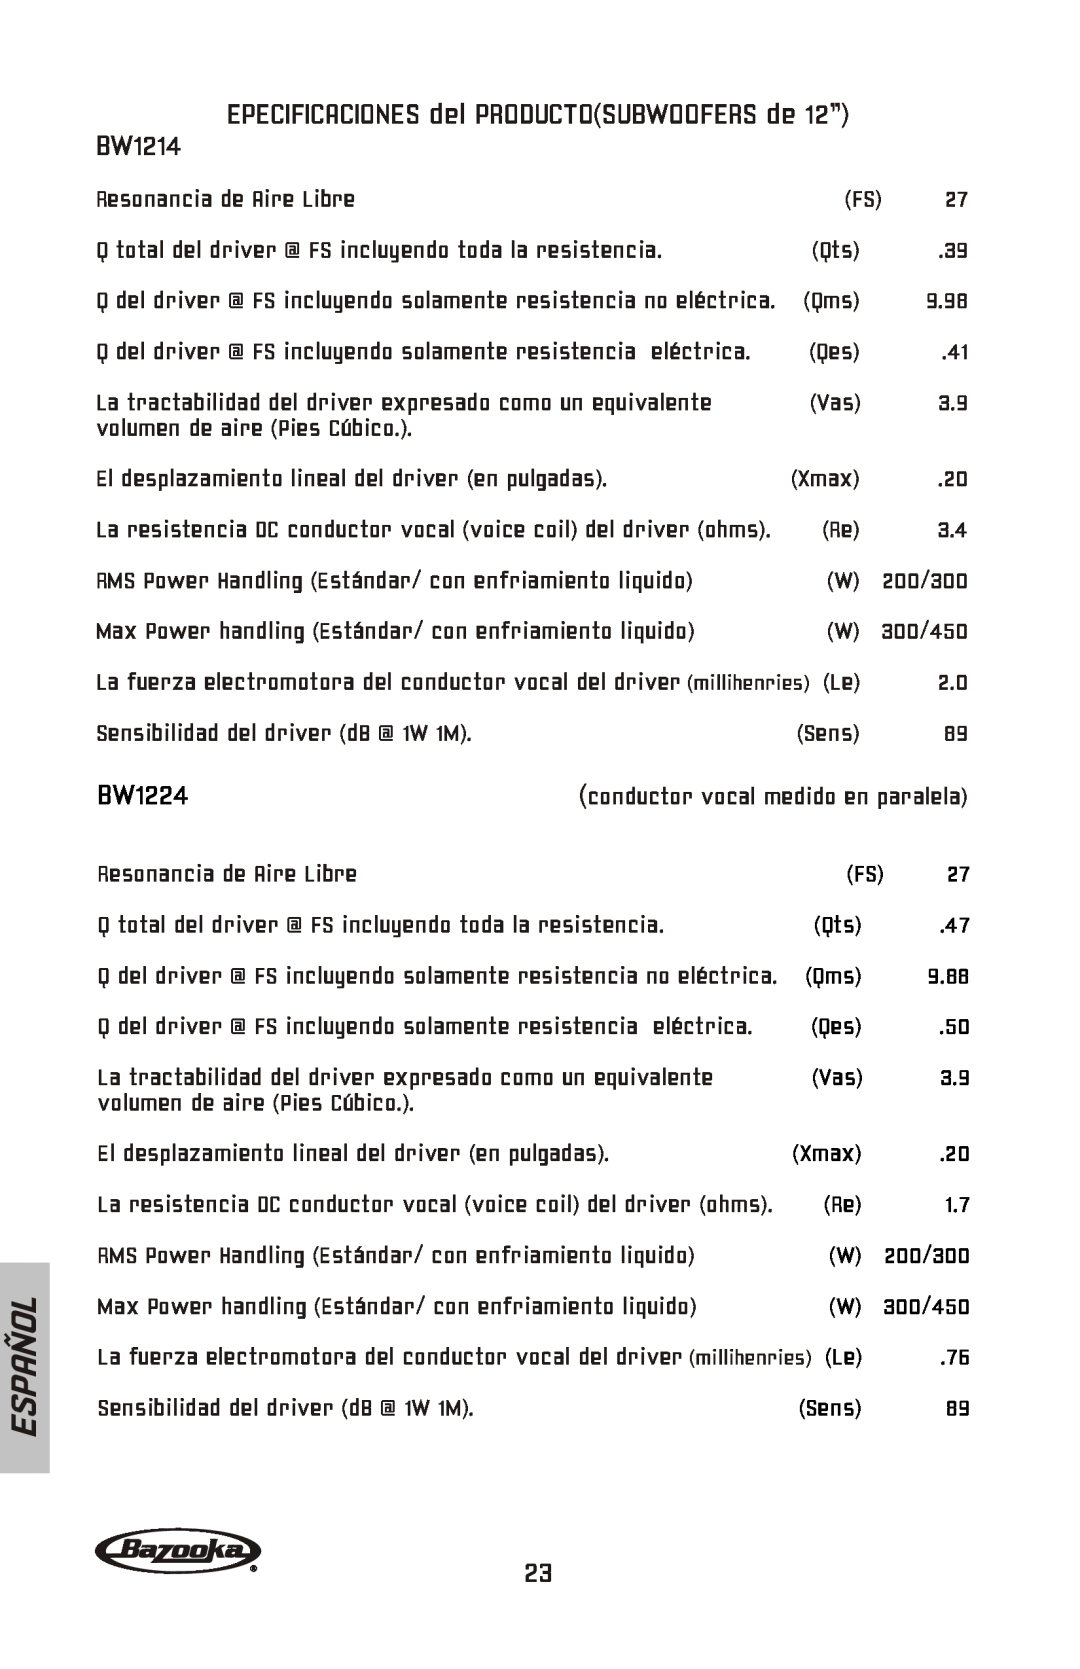 Bazooka BW1224, BW1024, BW1014 manual EPECIFICACIONES del PRODUCTOSUBWOOFERS de 12”, BW1214, Español 